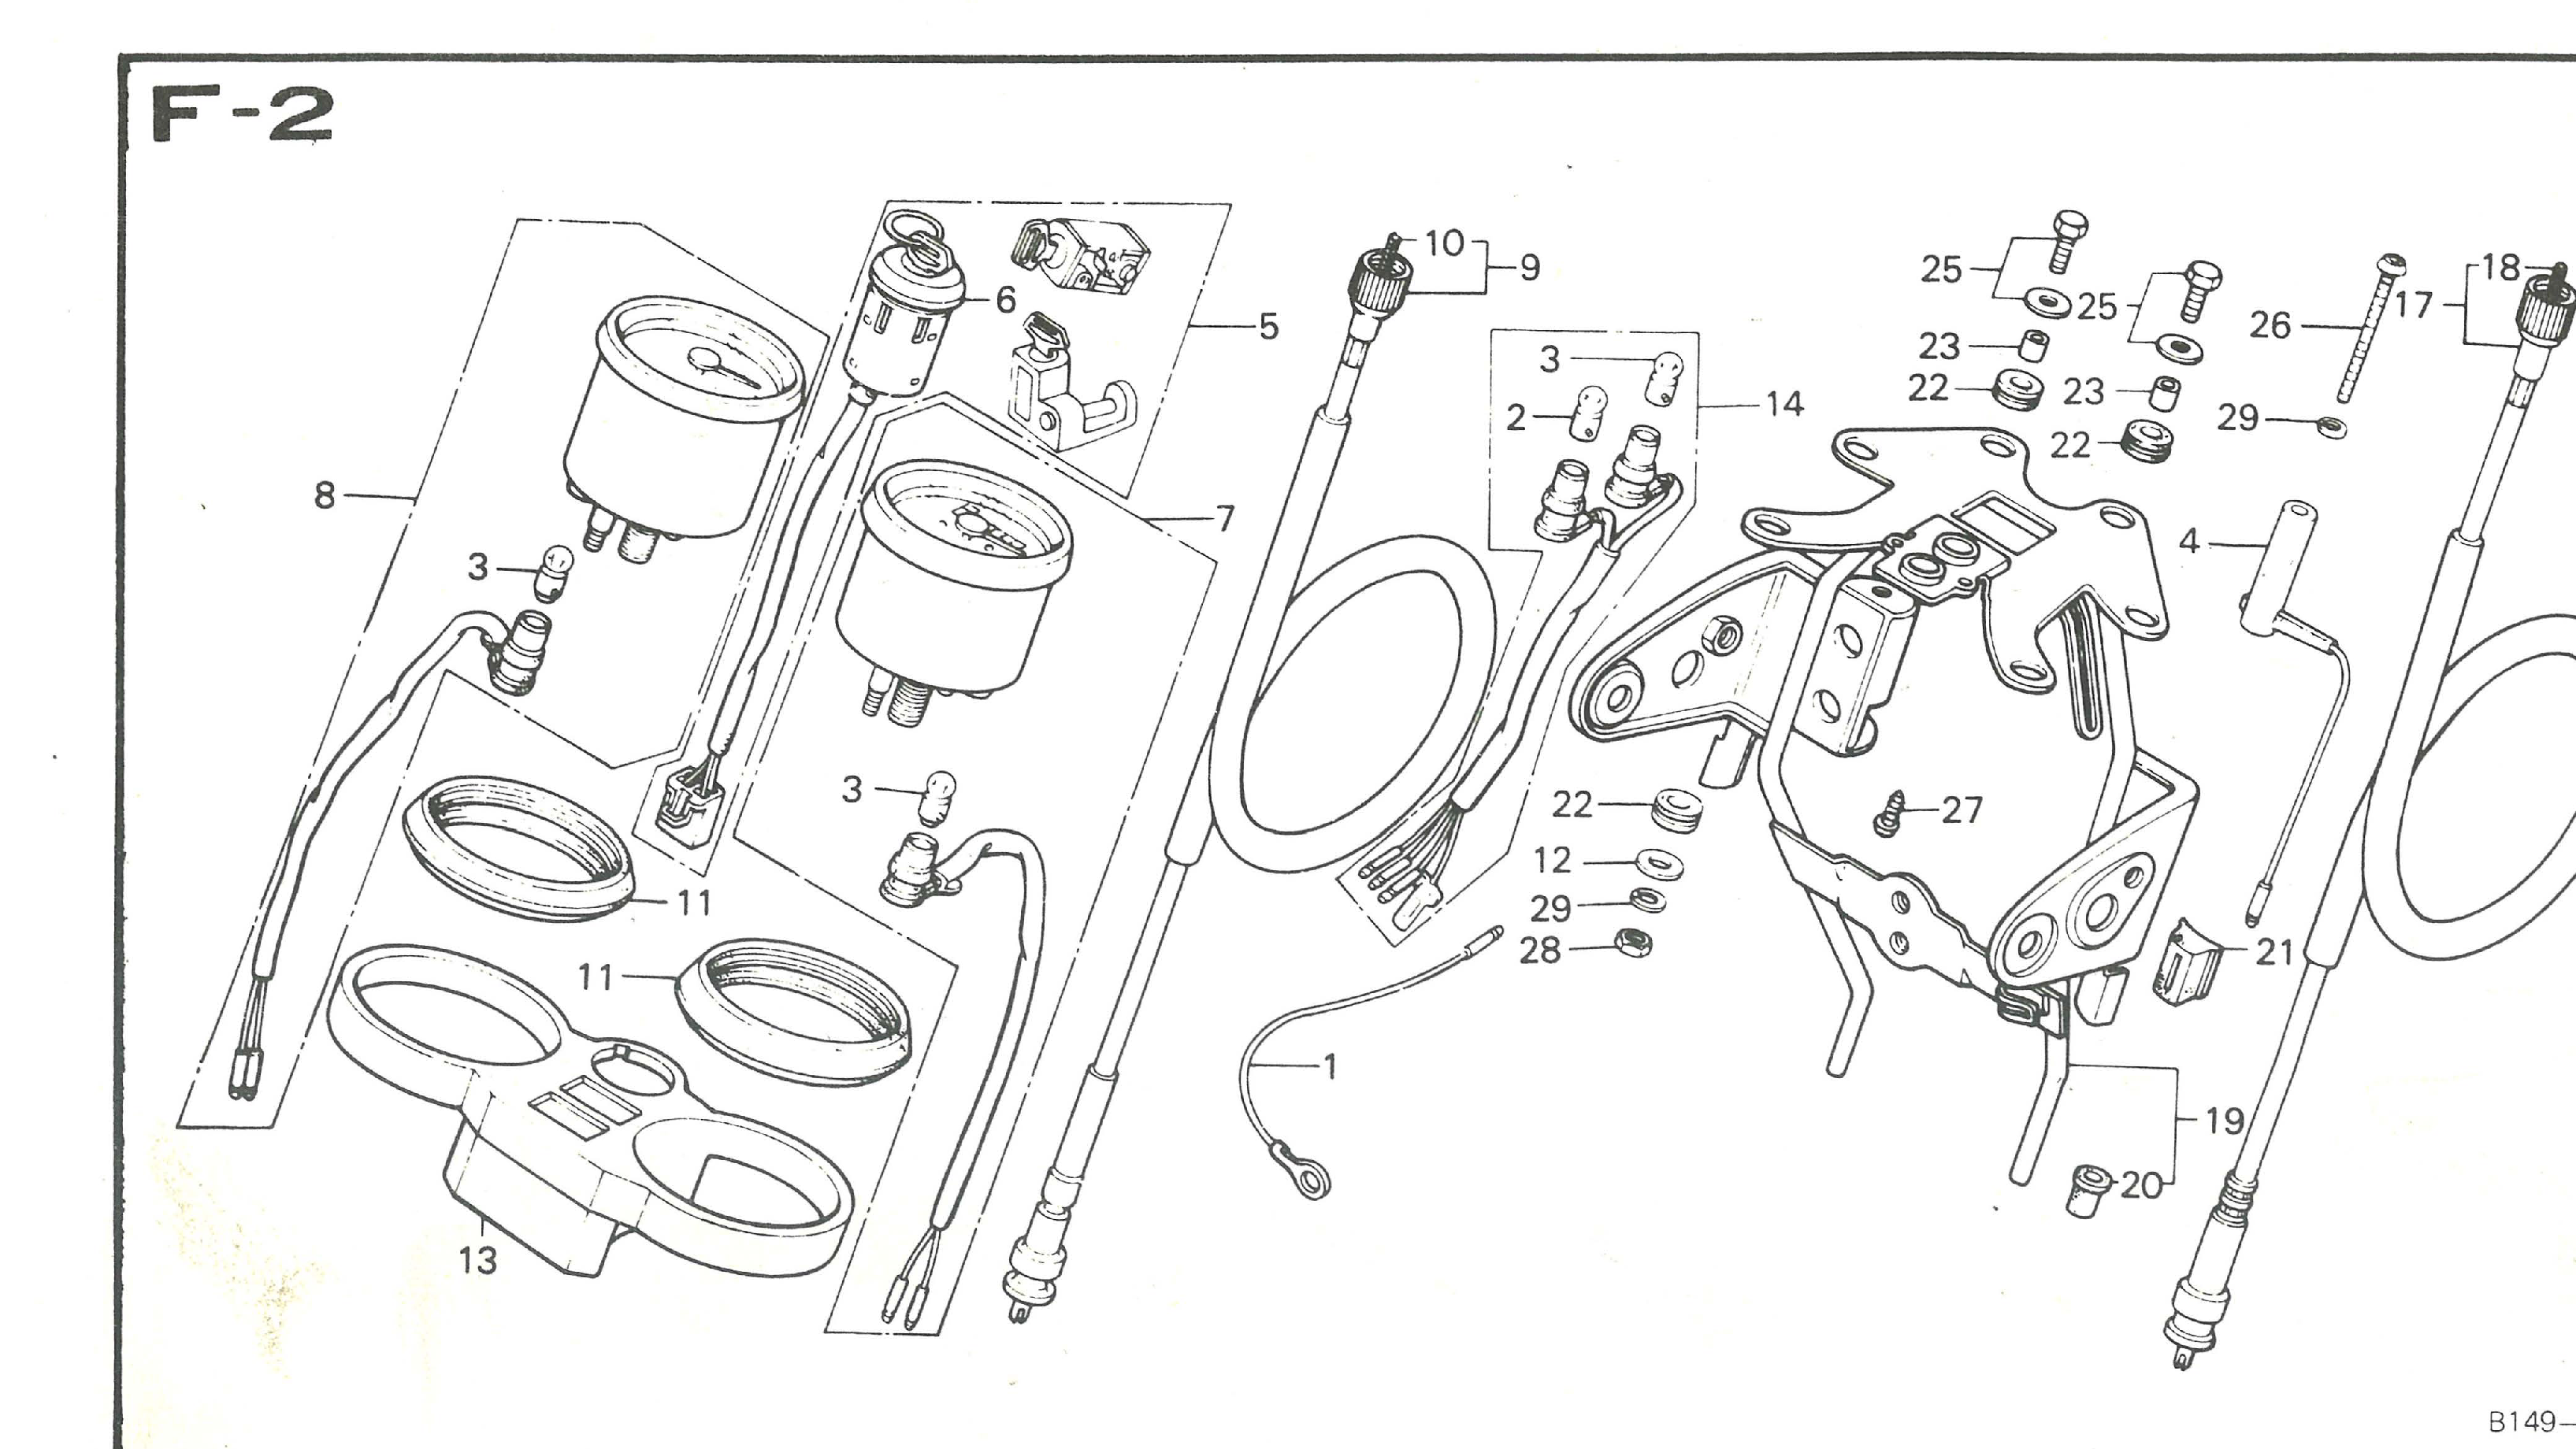 Instrumente spare parts for Instrumente CB 50 from 1971 - 1982 |  PartsRepublik